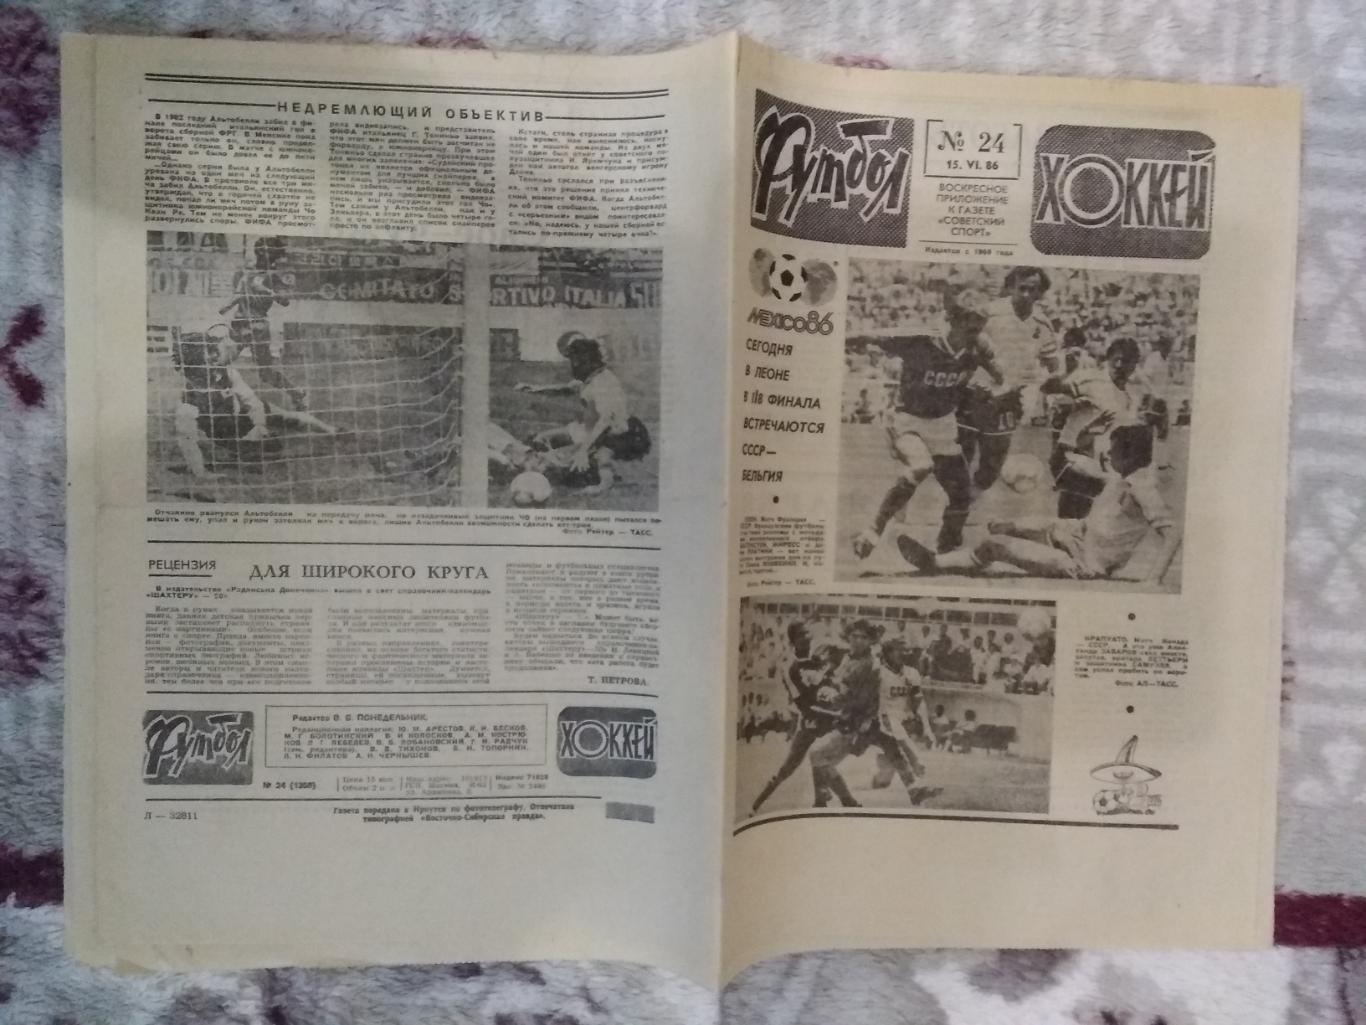 Футбол-Хоккей № 24 1986 г. (ЧМ Мексика).